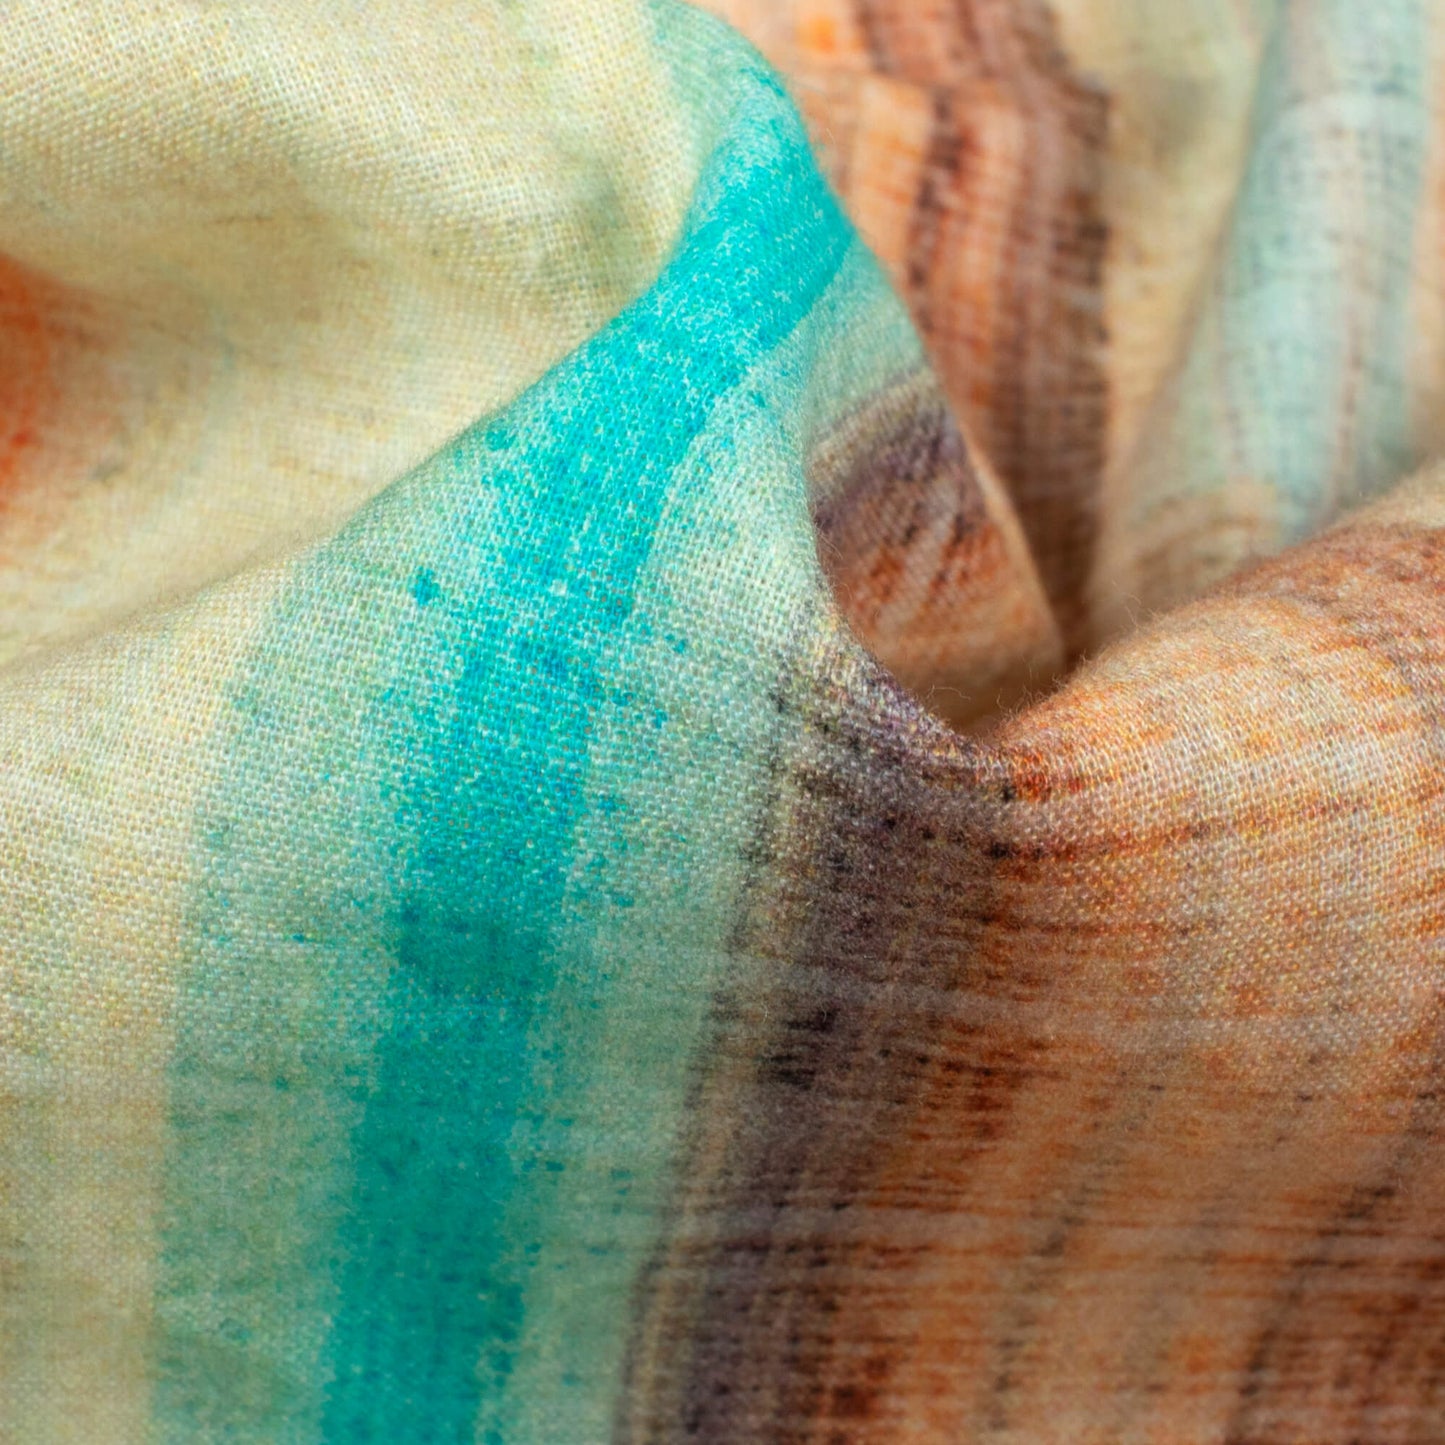 Ivory Cream And Orange Stripes Digital Print Cotton Cambric Fabric